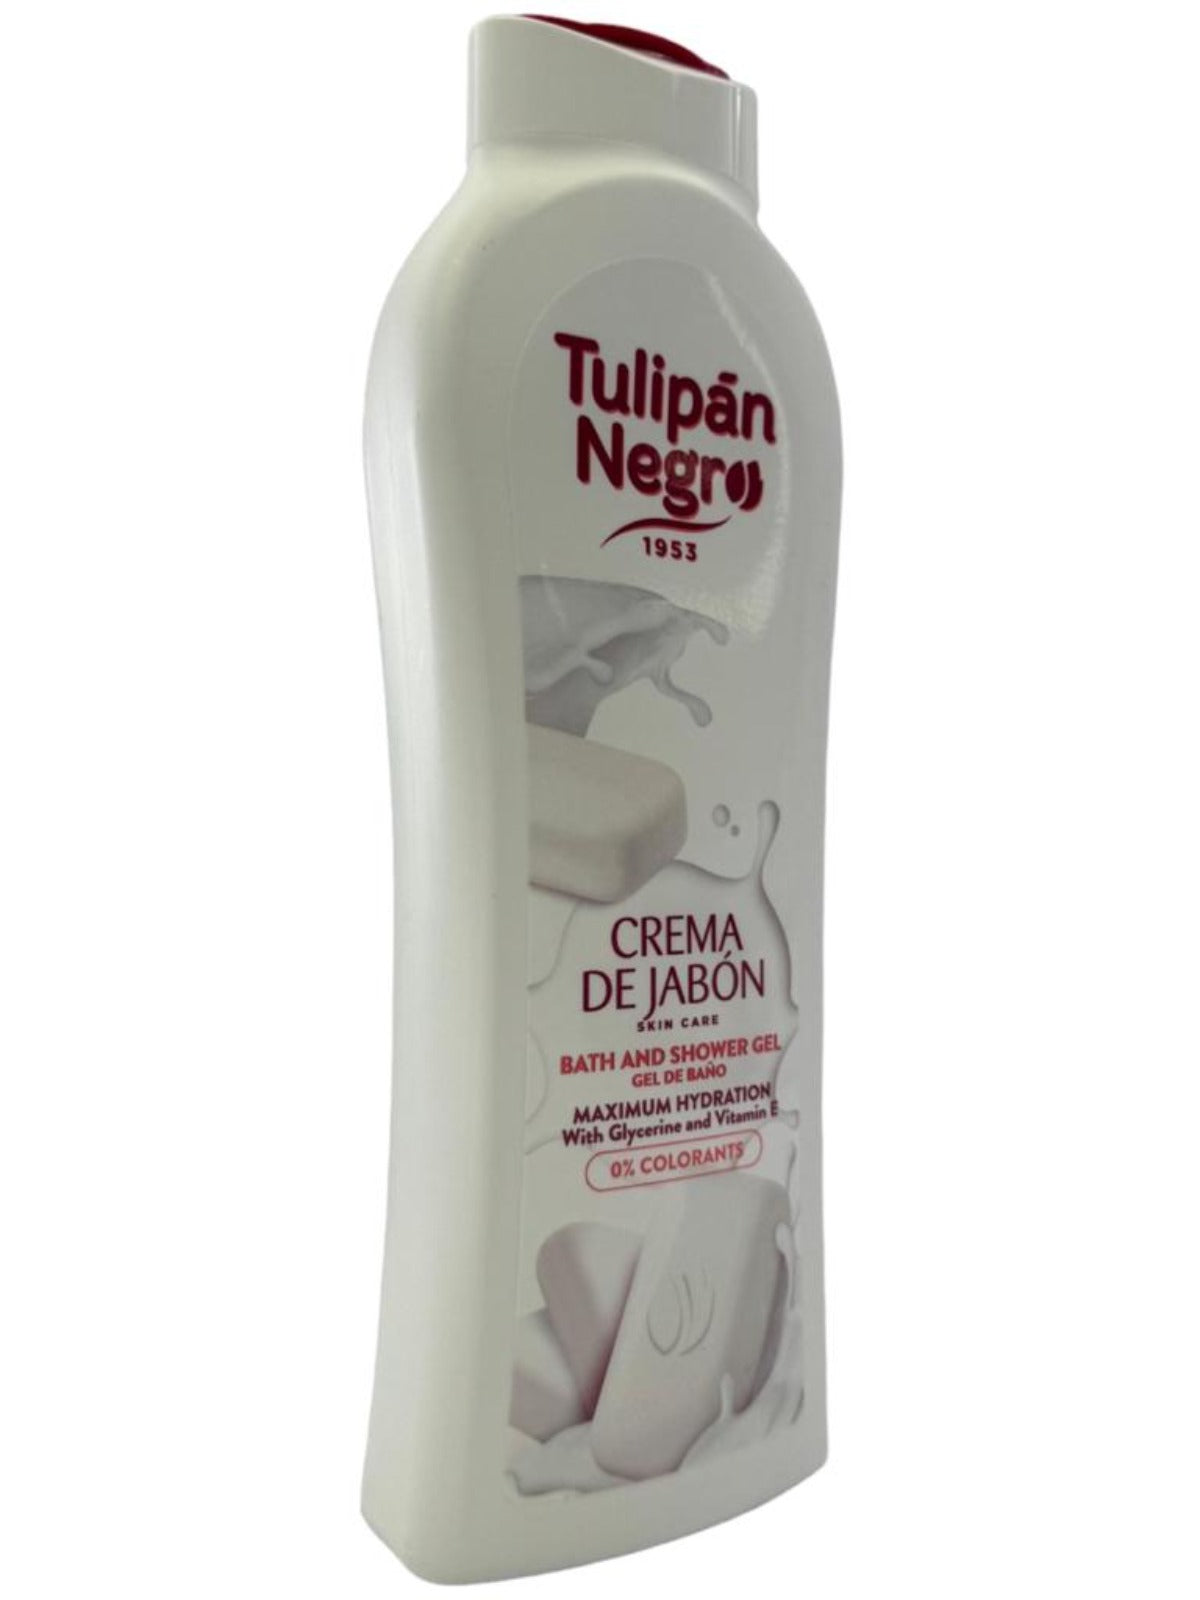 Tulipan Negro Crema de Jabon Spanish Bath And Shower Gel 650ml